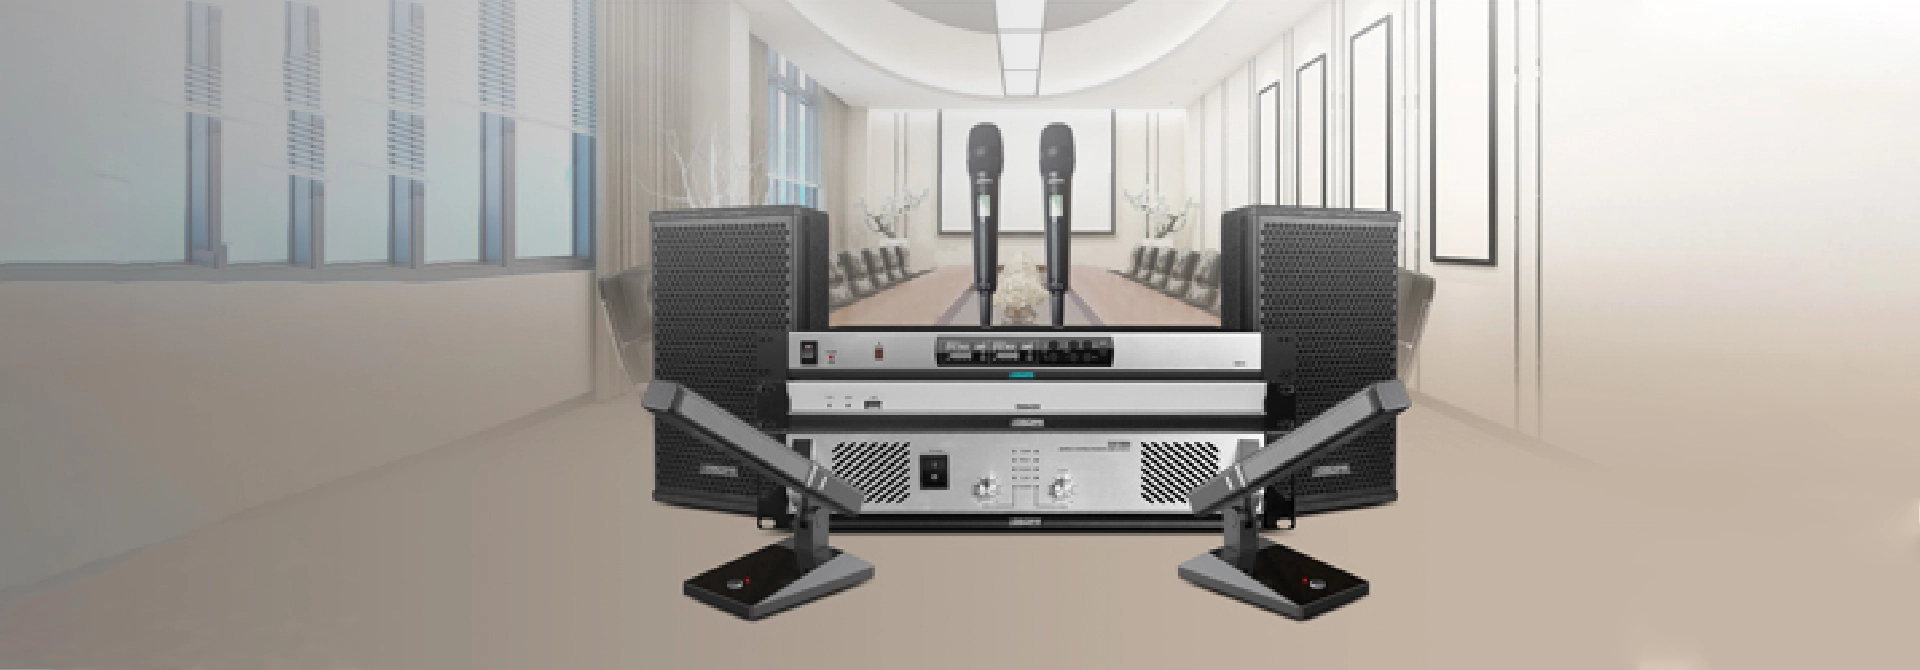 Soluzione di sistema audio professionale per sale conferenze D6643H D5830